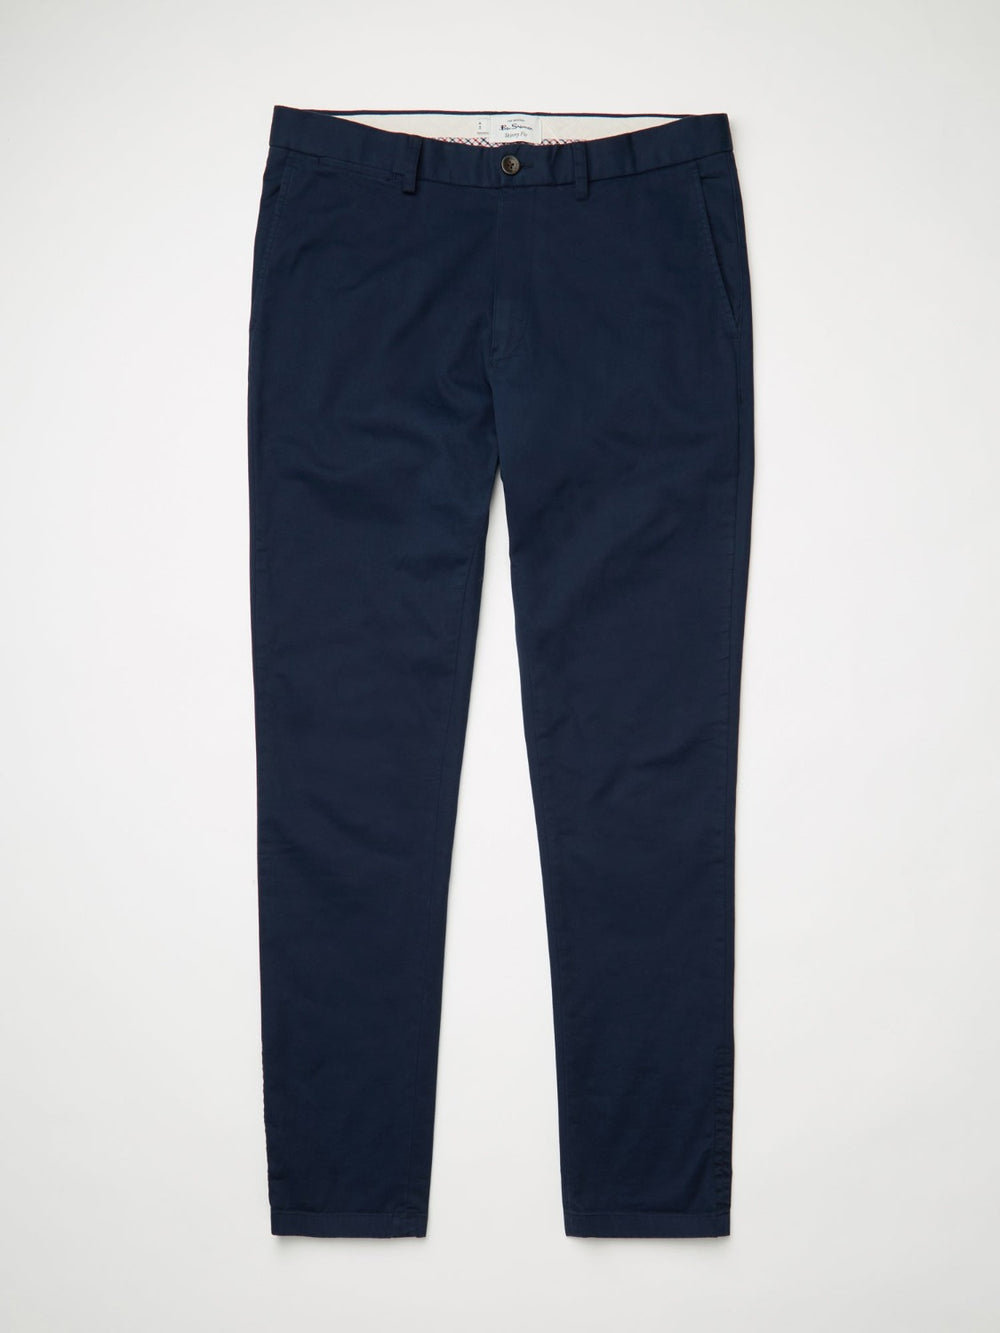 Men's Dark Blue Windowpane Plaid Slim Fit Suit Pants